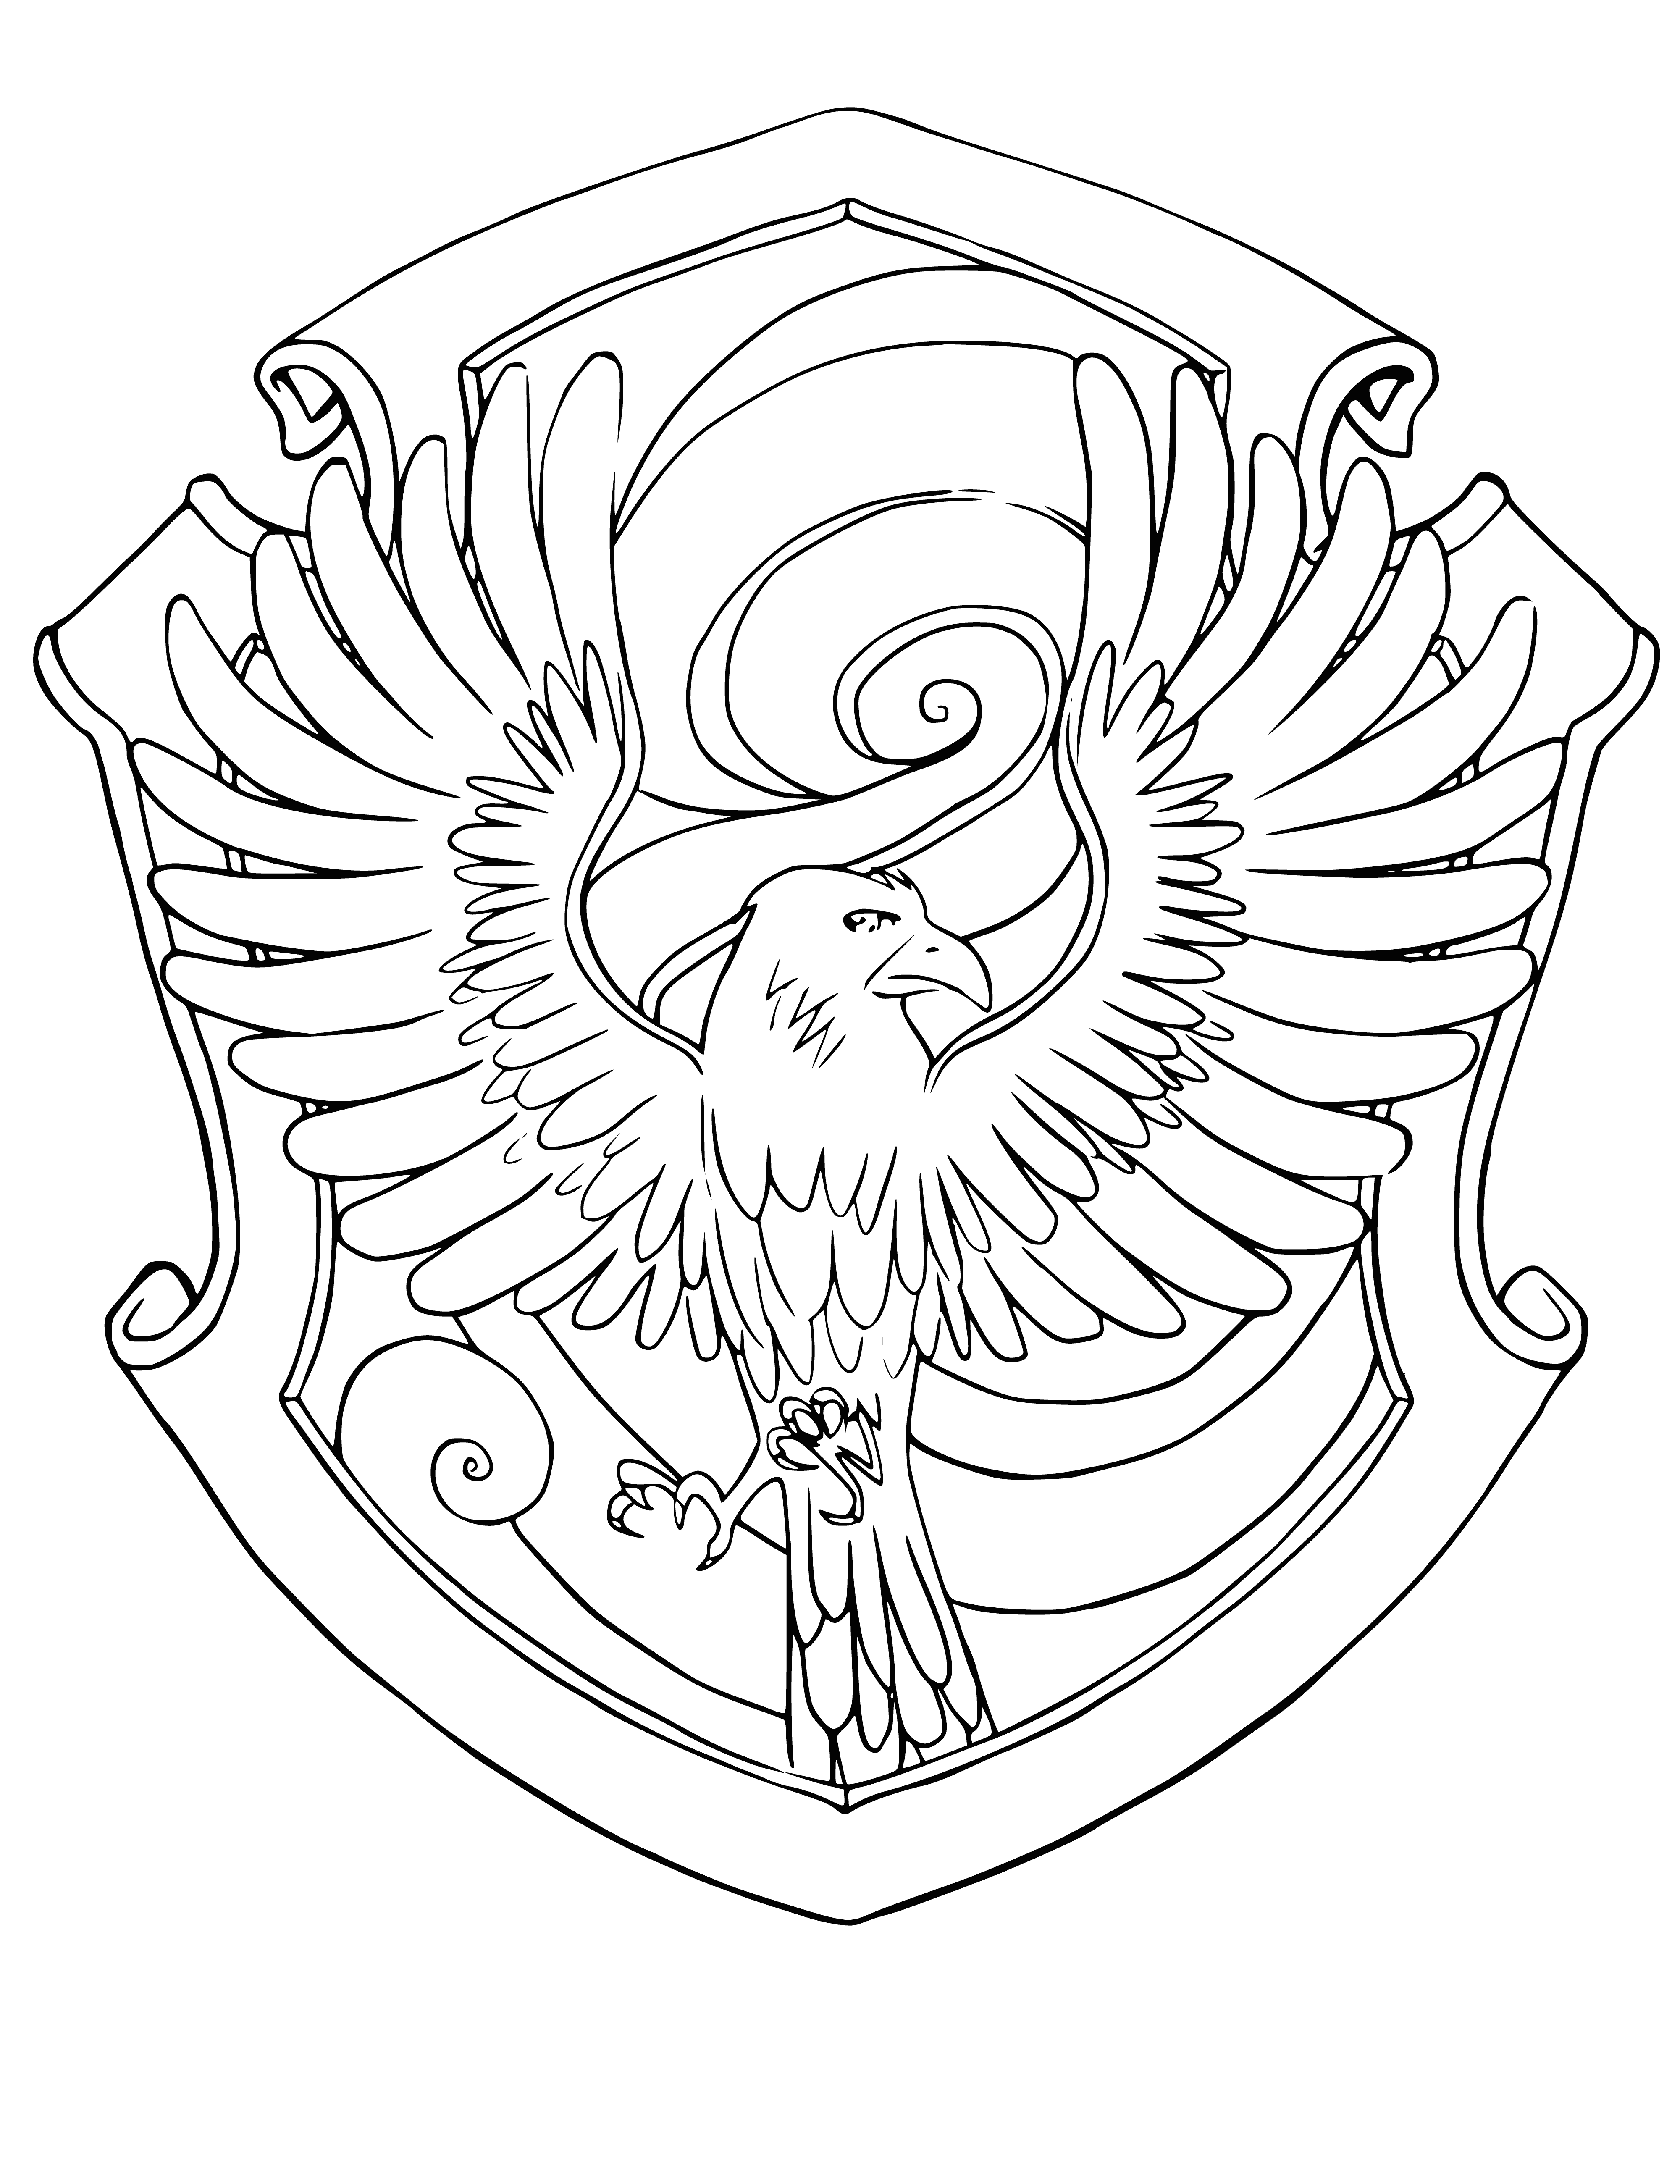 coloring page: Ravenclaw Faculty Emblem is silver badge shaped like a raven w/ wings spread & beak open. Silver scroll has "Ravenclaw" written on it.